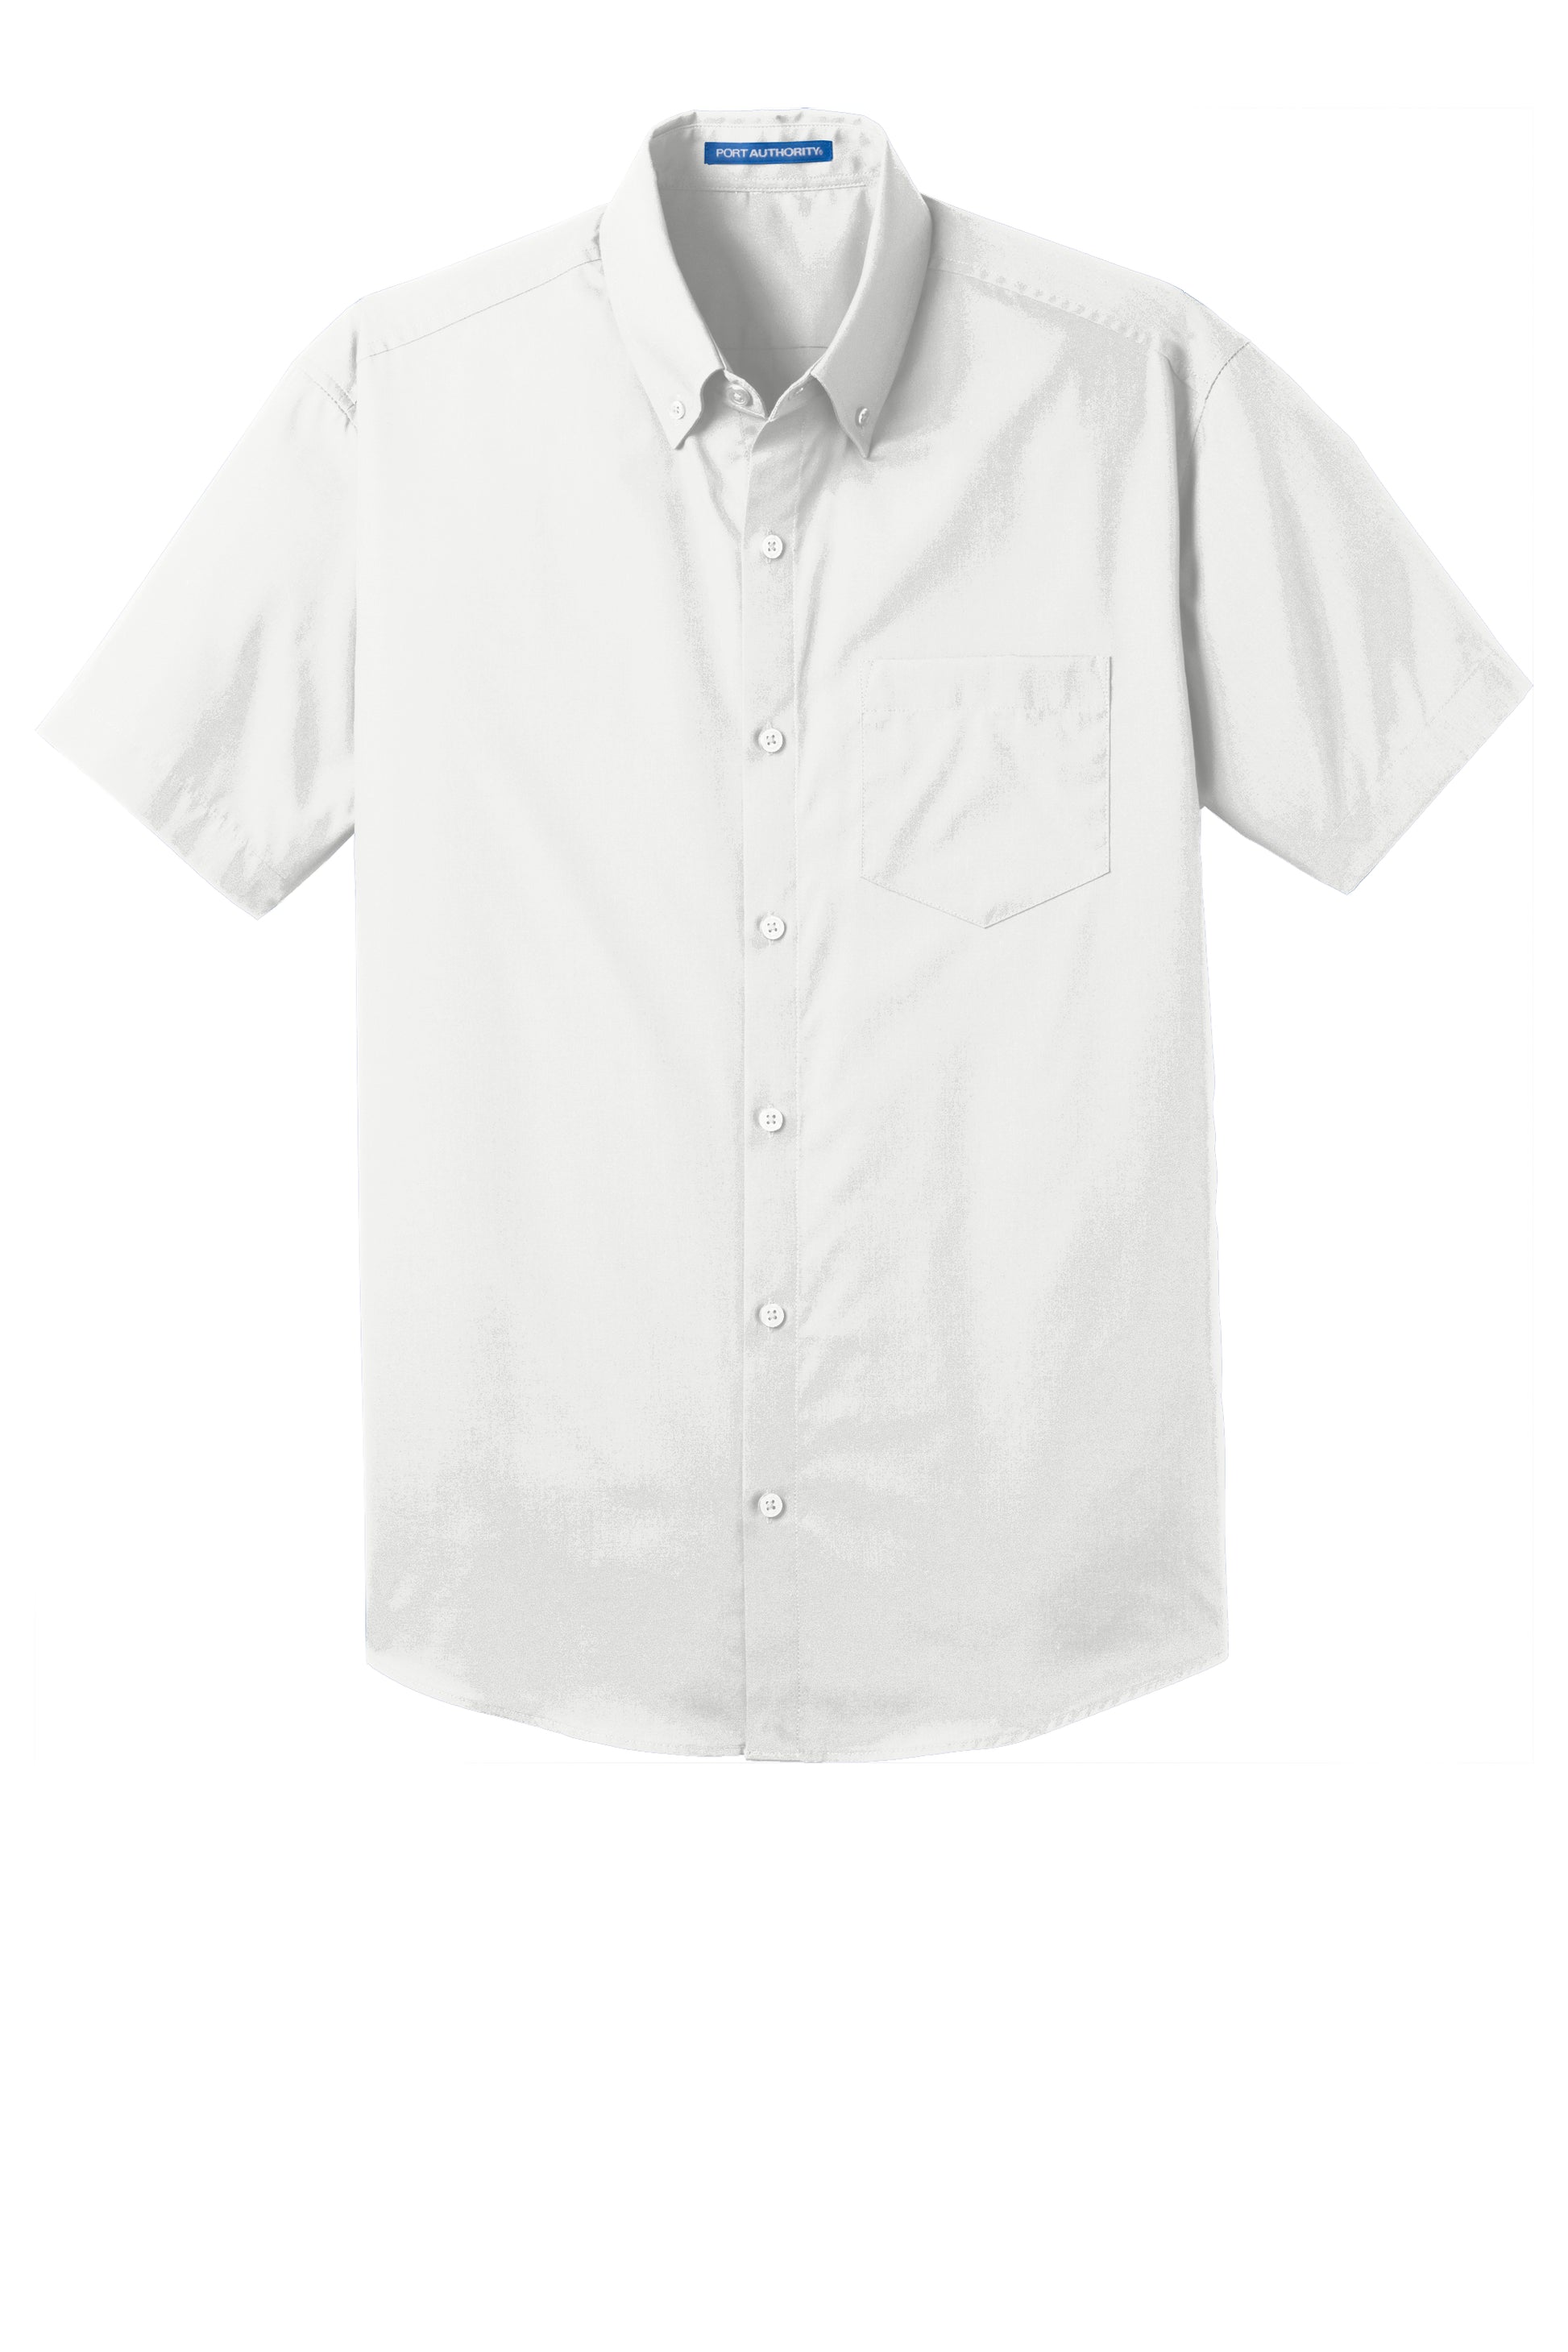 port authority carefree poplin shirt white